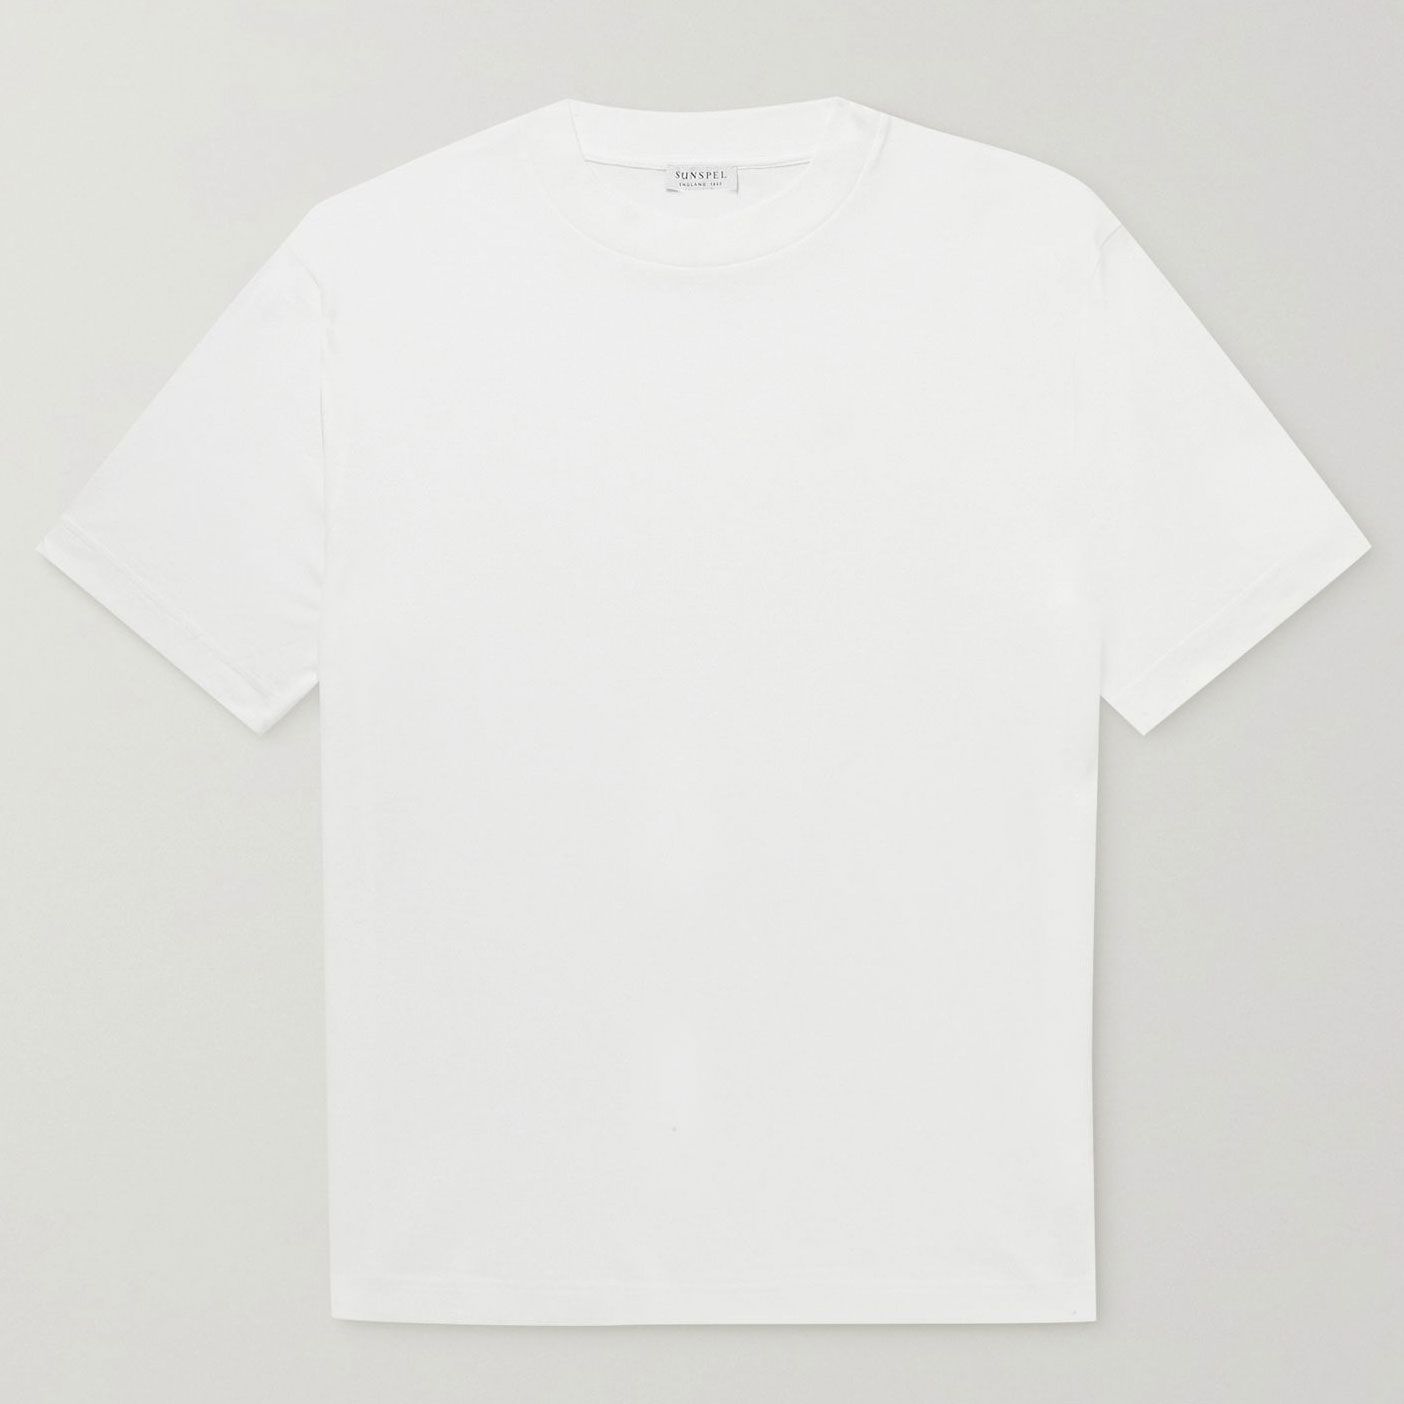 white tee shirt plain